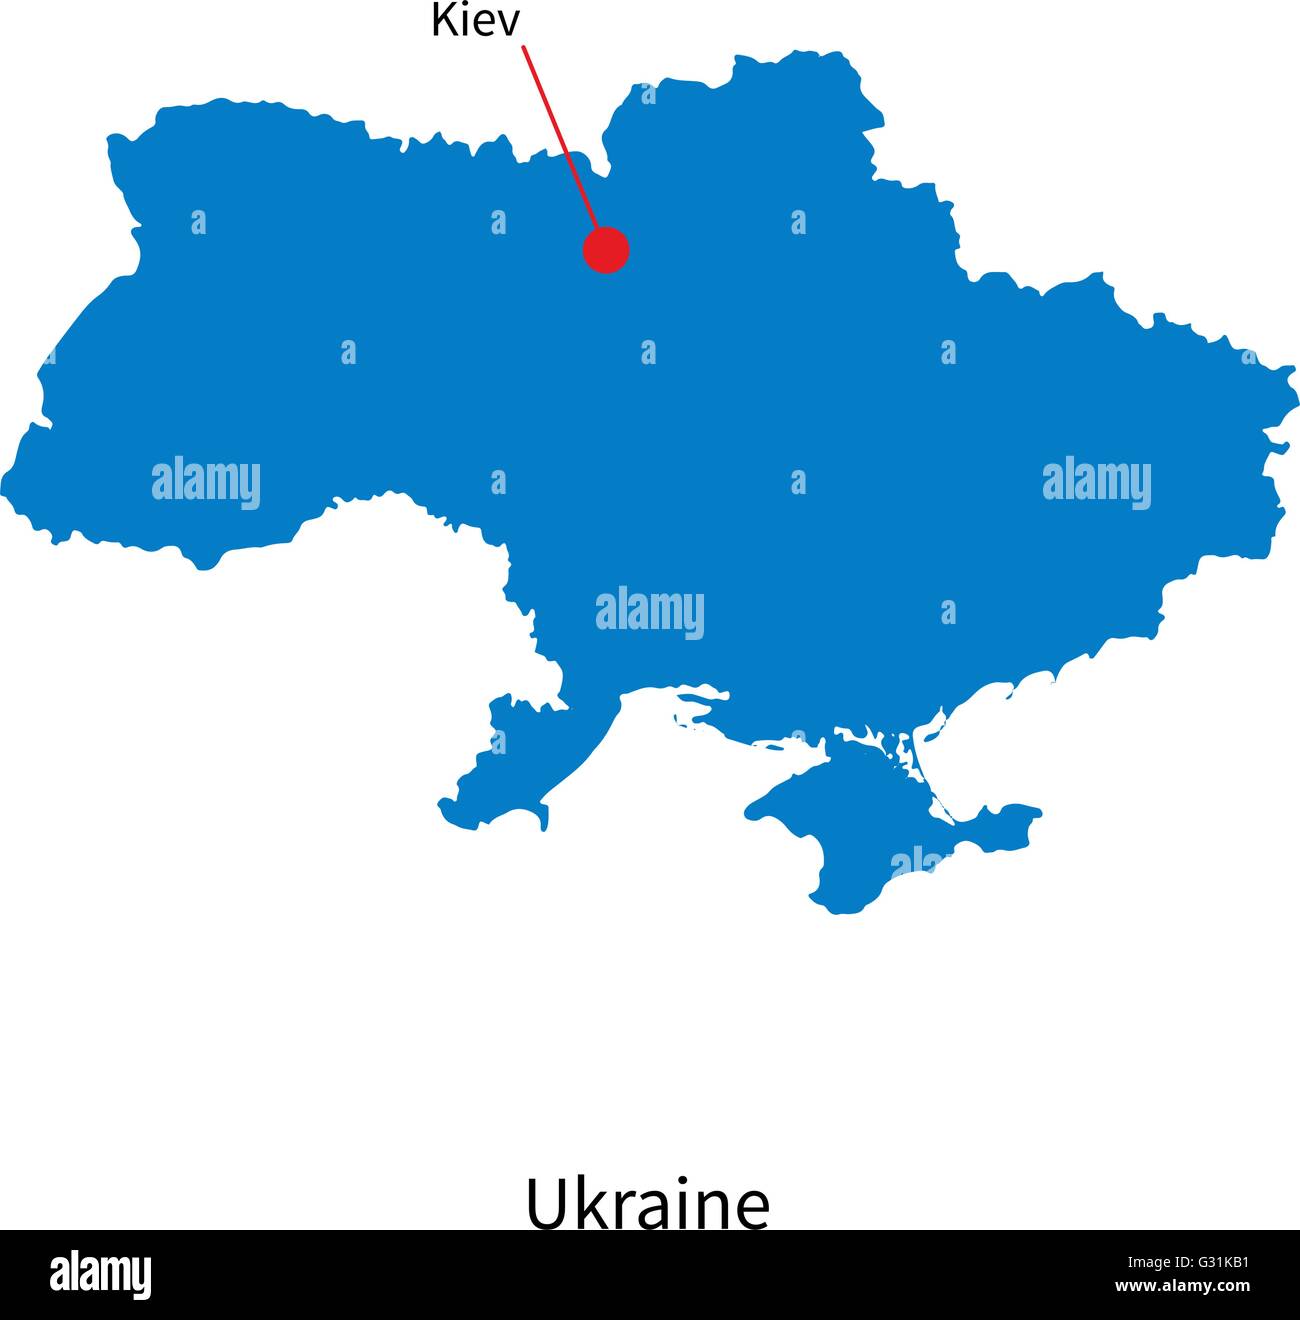 Detailed vector map of Ukraine and capital city Kiev Stock Vector